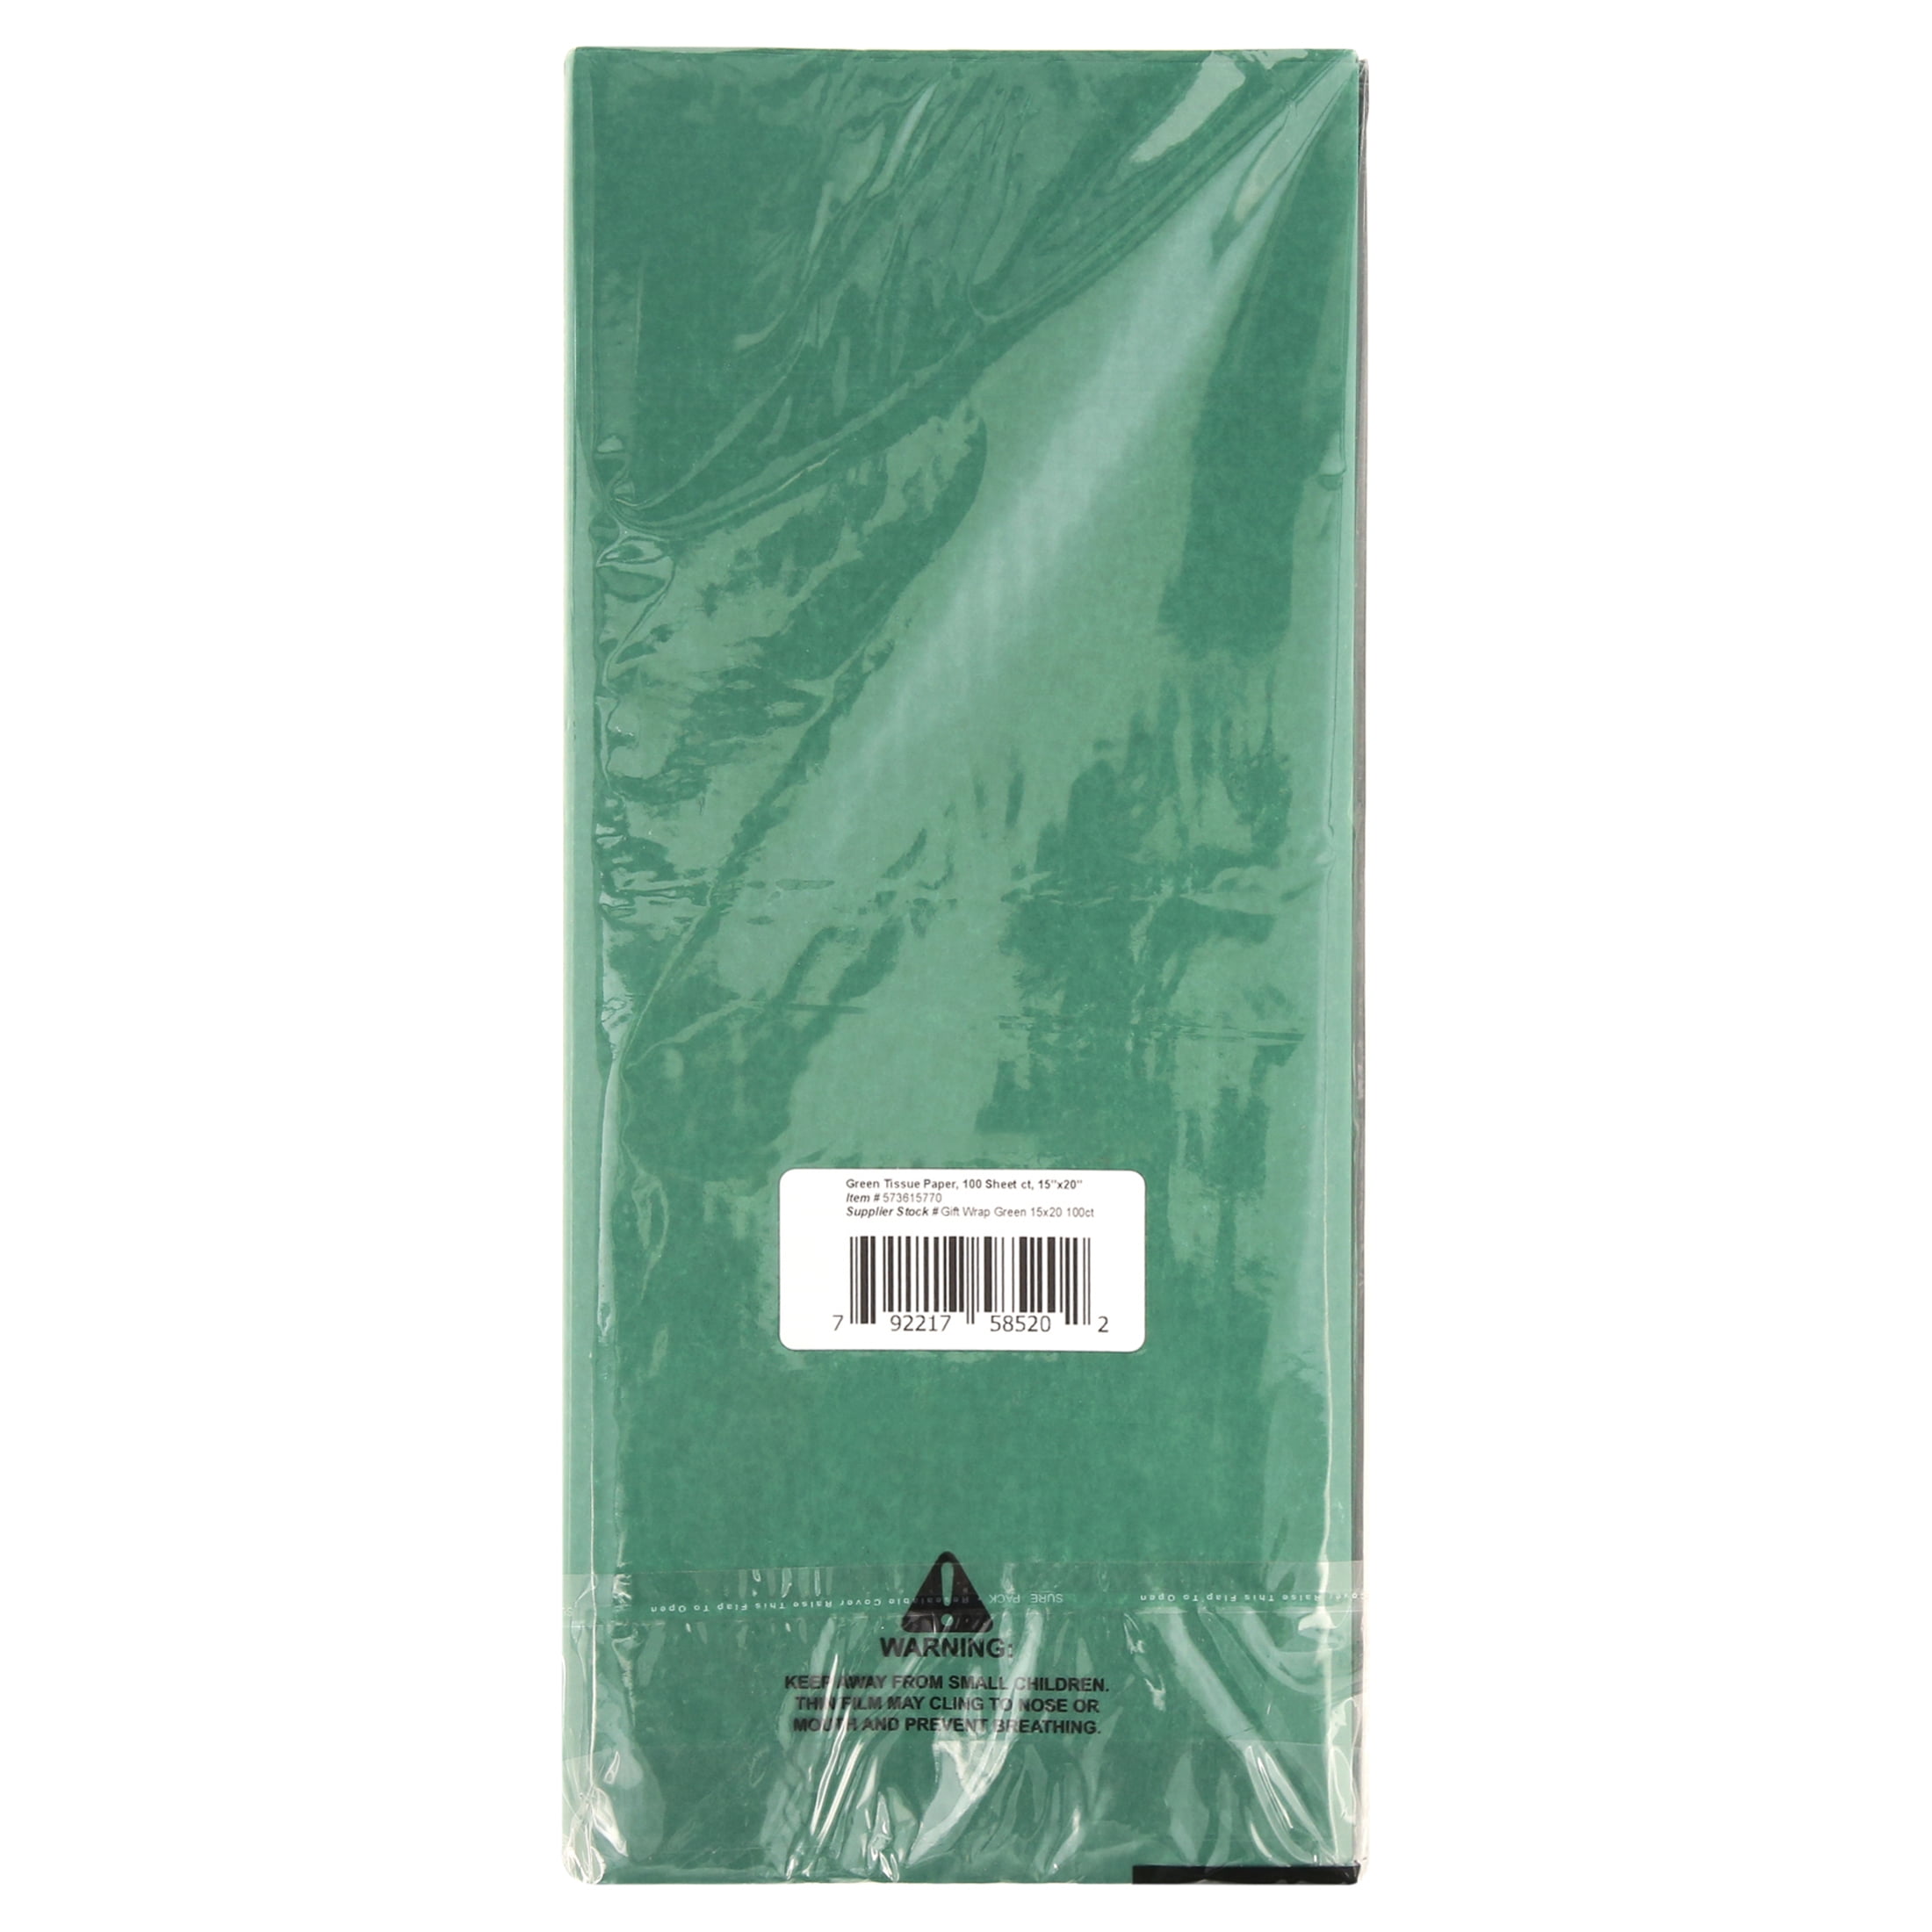 TIS-038: 760 x 500 mm colored tissue paper.<br>Dark green - Pakuotes centras